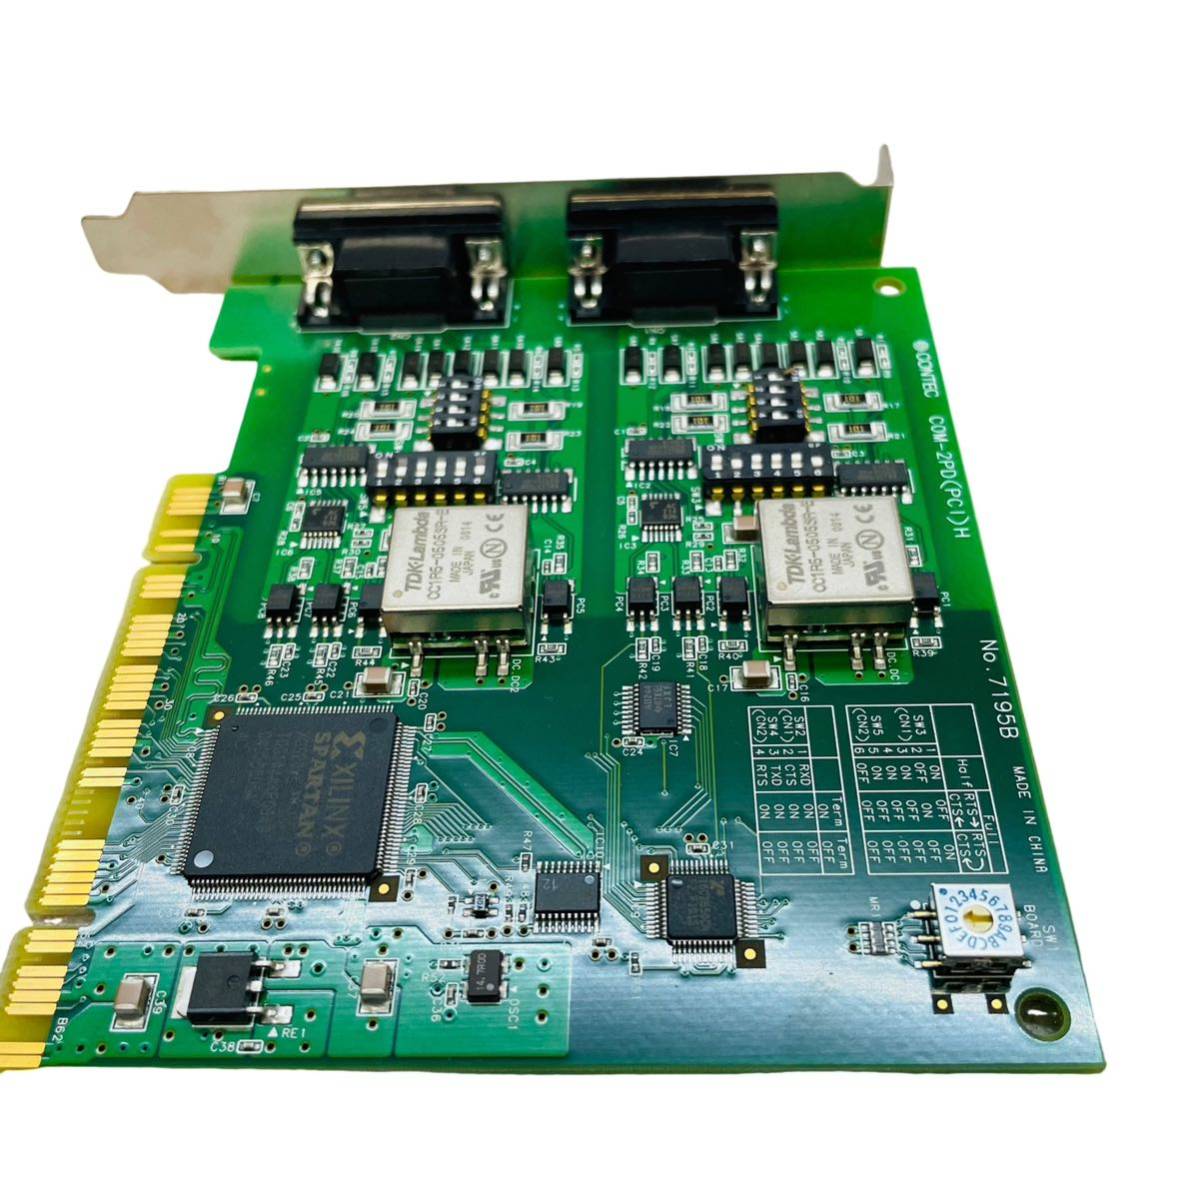 J4-2) navy blue Tec RS422/485 2CH serial I/O board (PCI) COM-2PD(PCI)H( secondhand goods )(27)